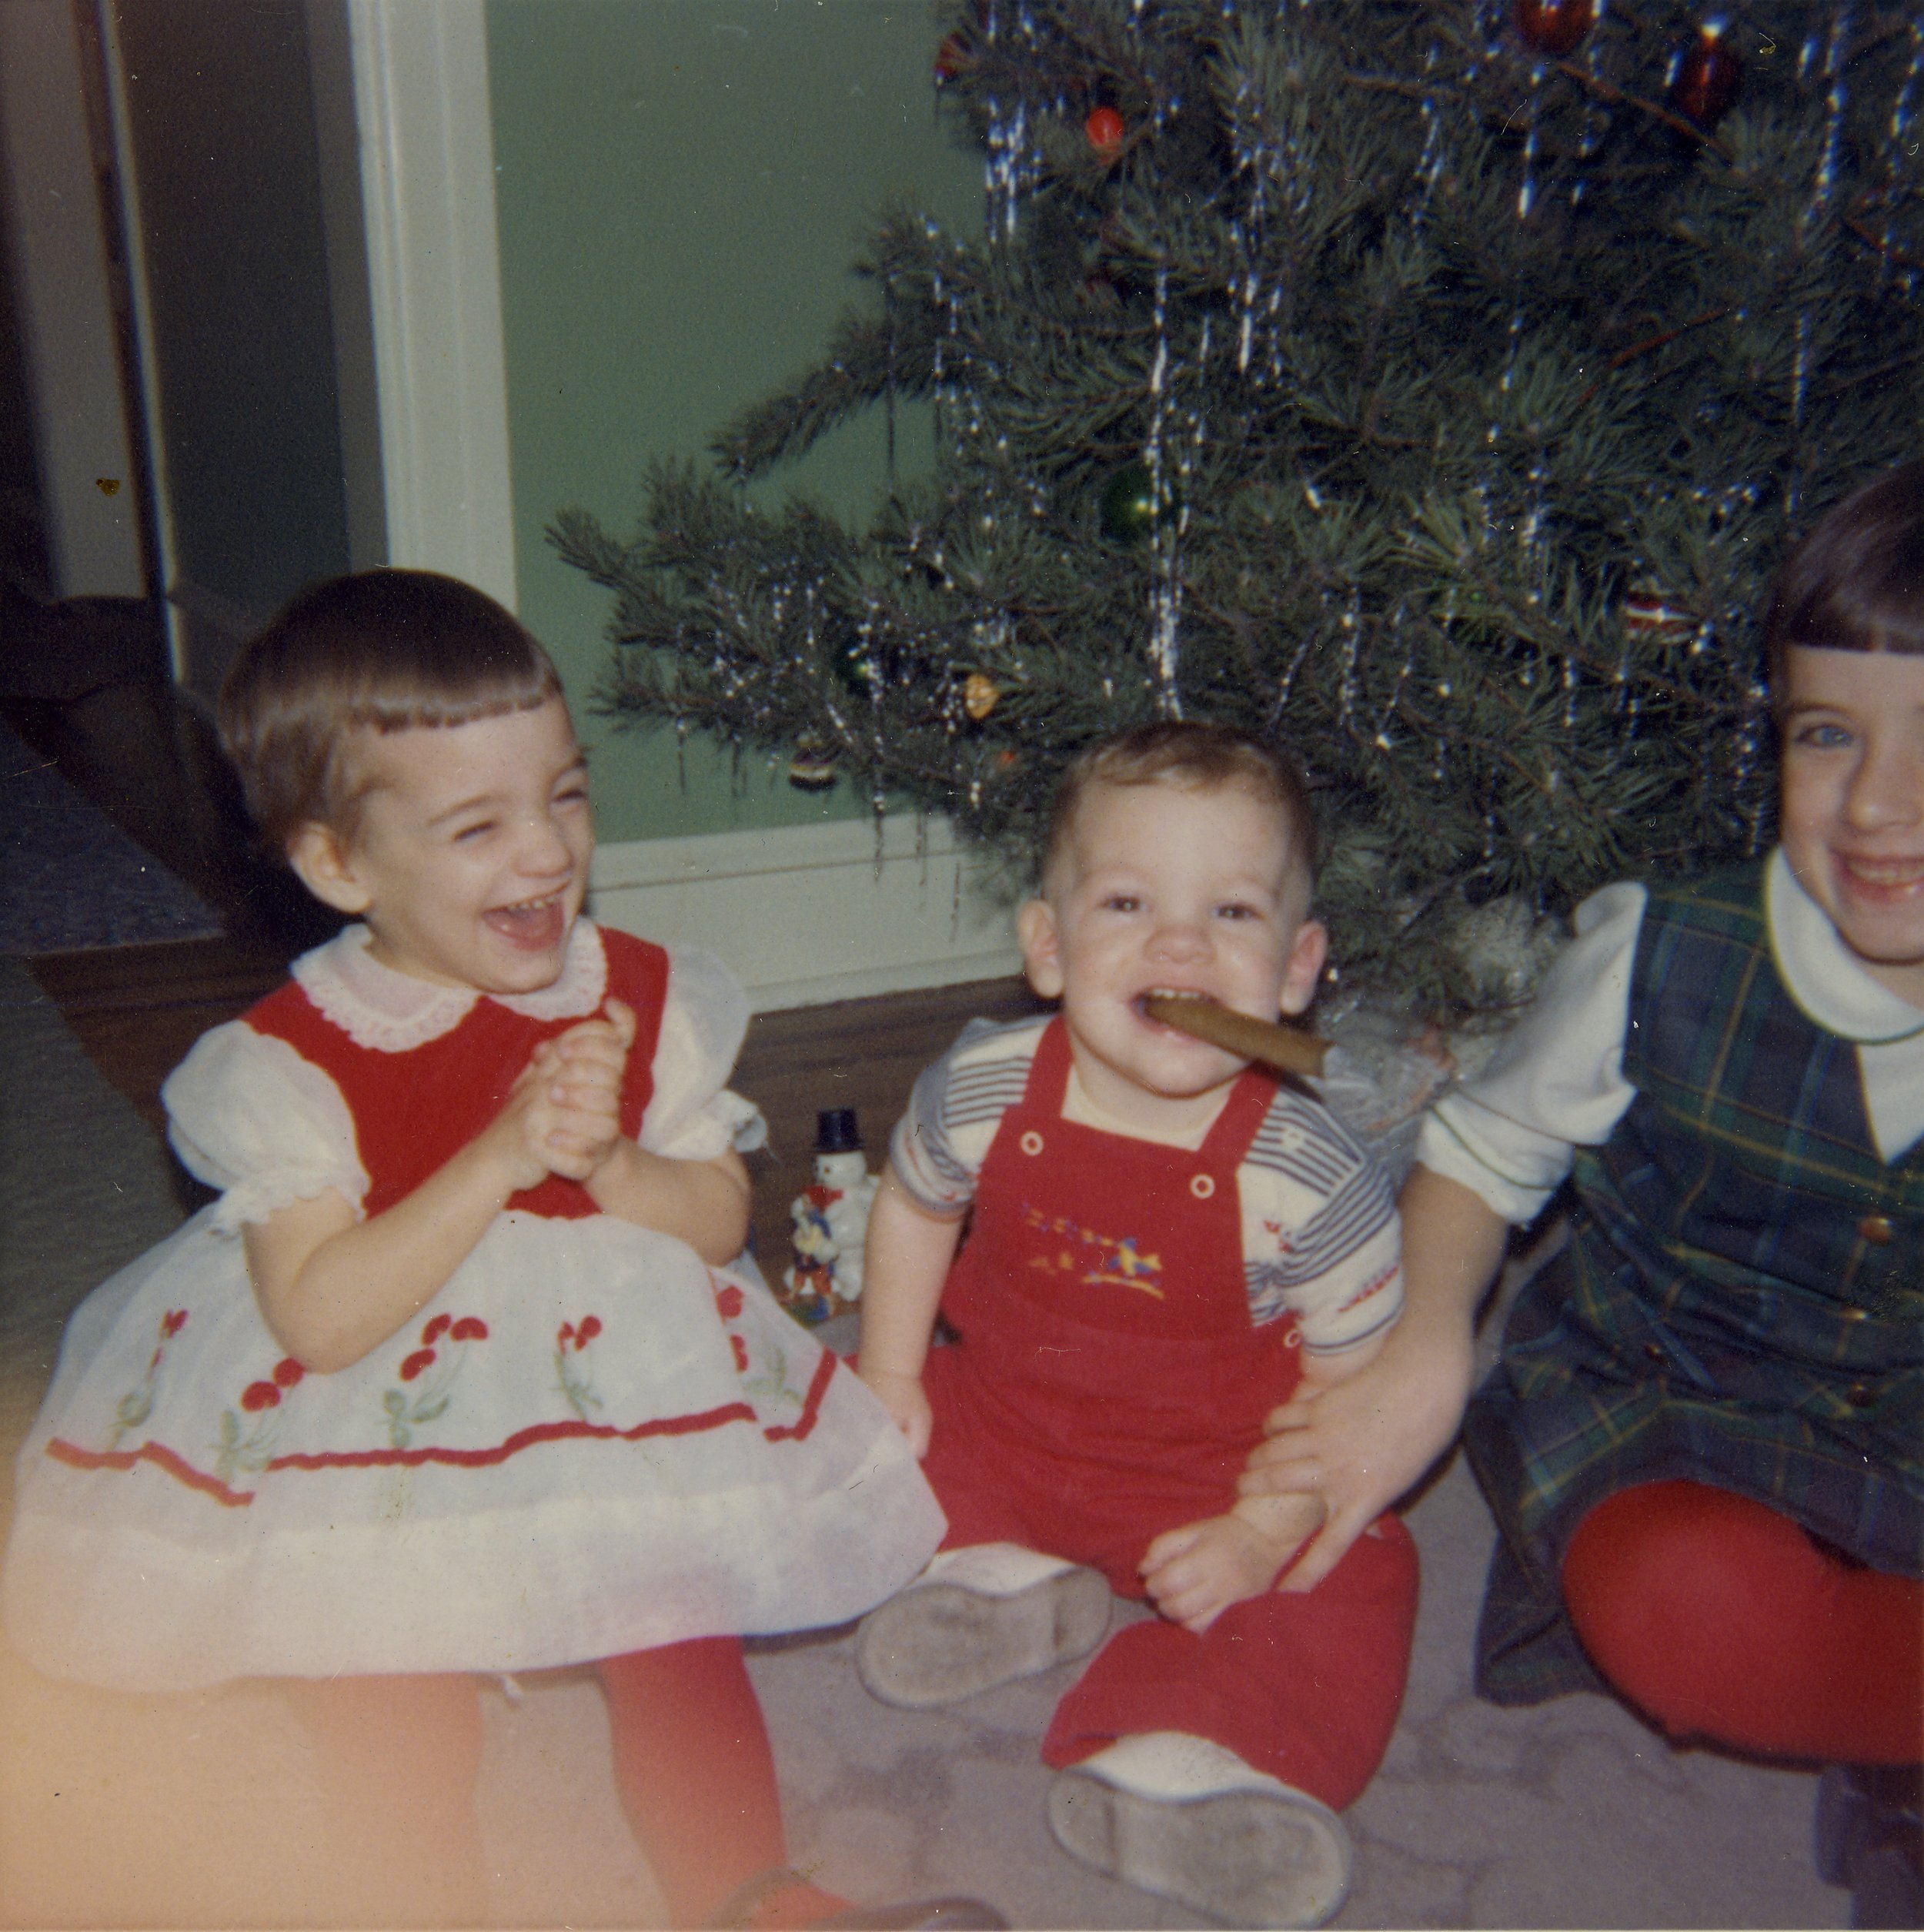  Family Party, Philadelphia 1960’s, from the Conlon family archive 